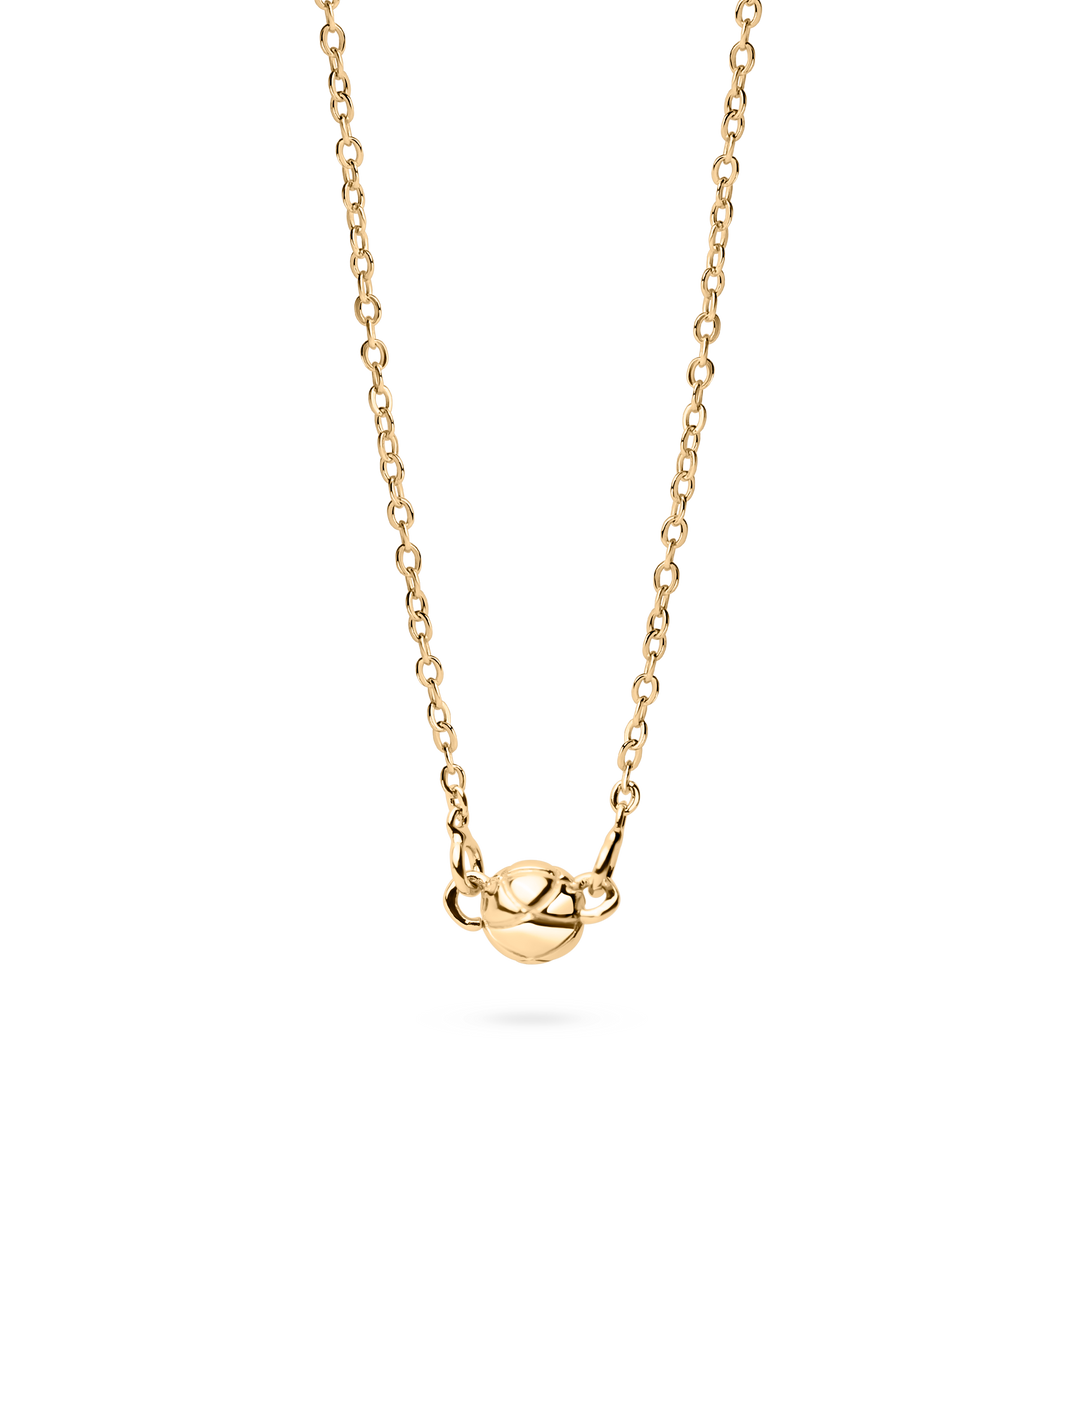 Ball Necklace by Janni Delér 18k gold plated brass